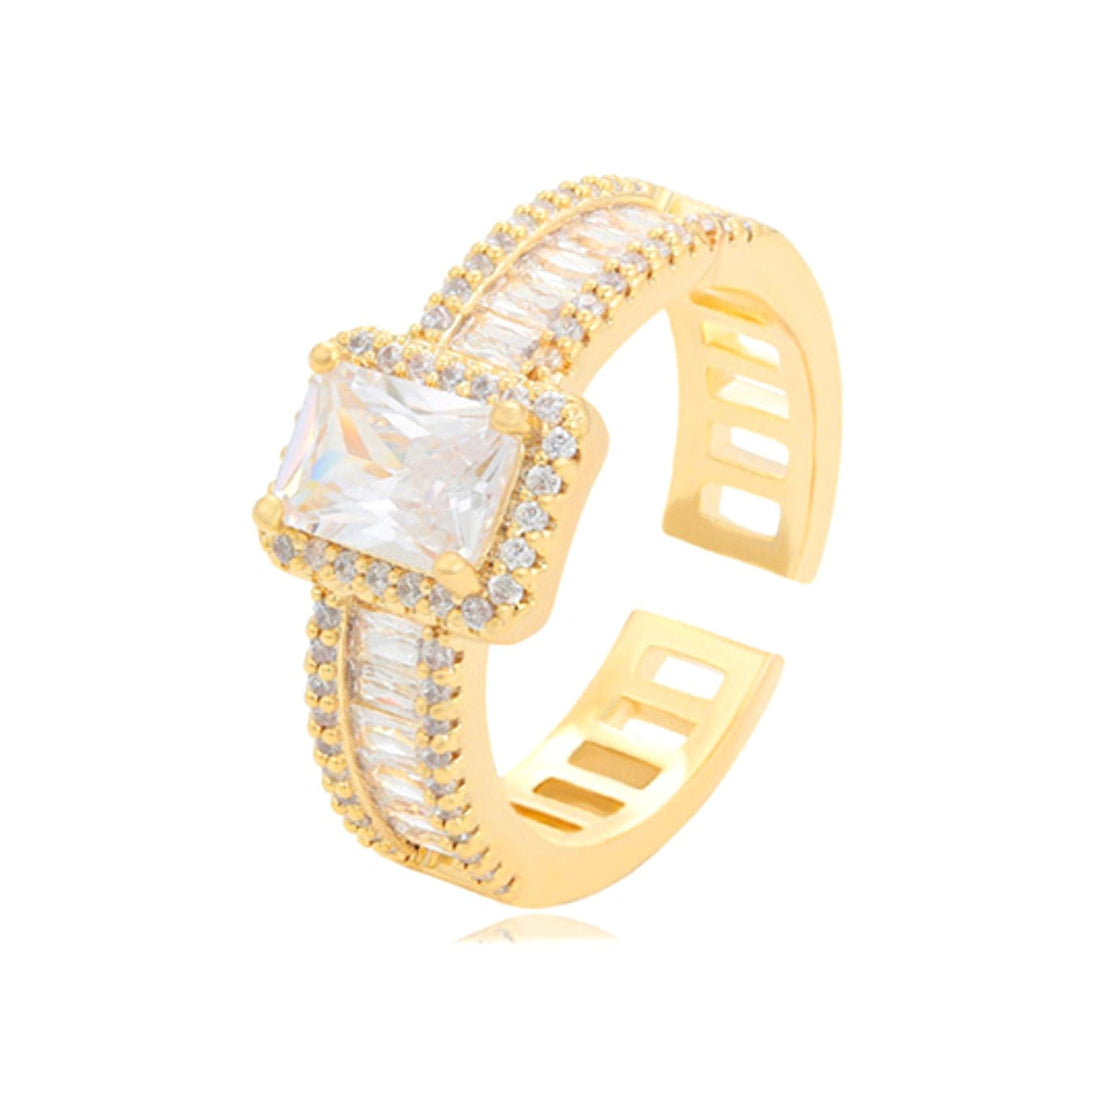 bianco rosso Rings YMR-422 cyprus greece jewelry gift free shipping europe worldwide